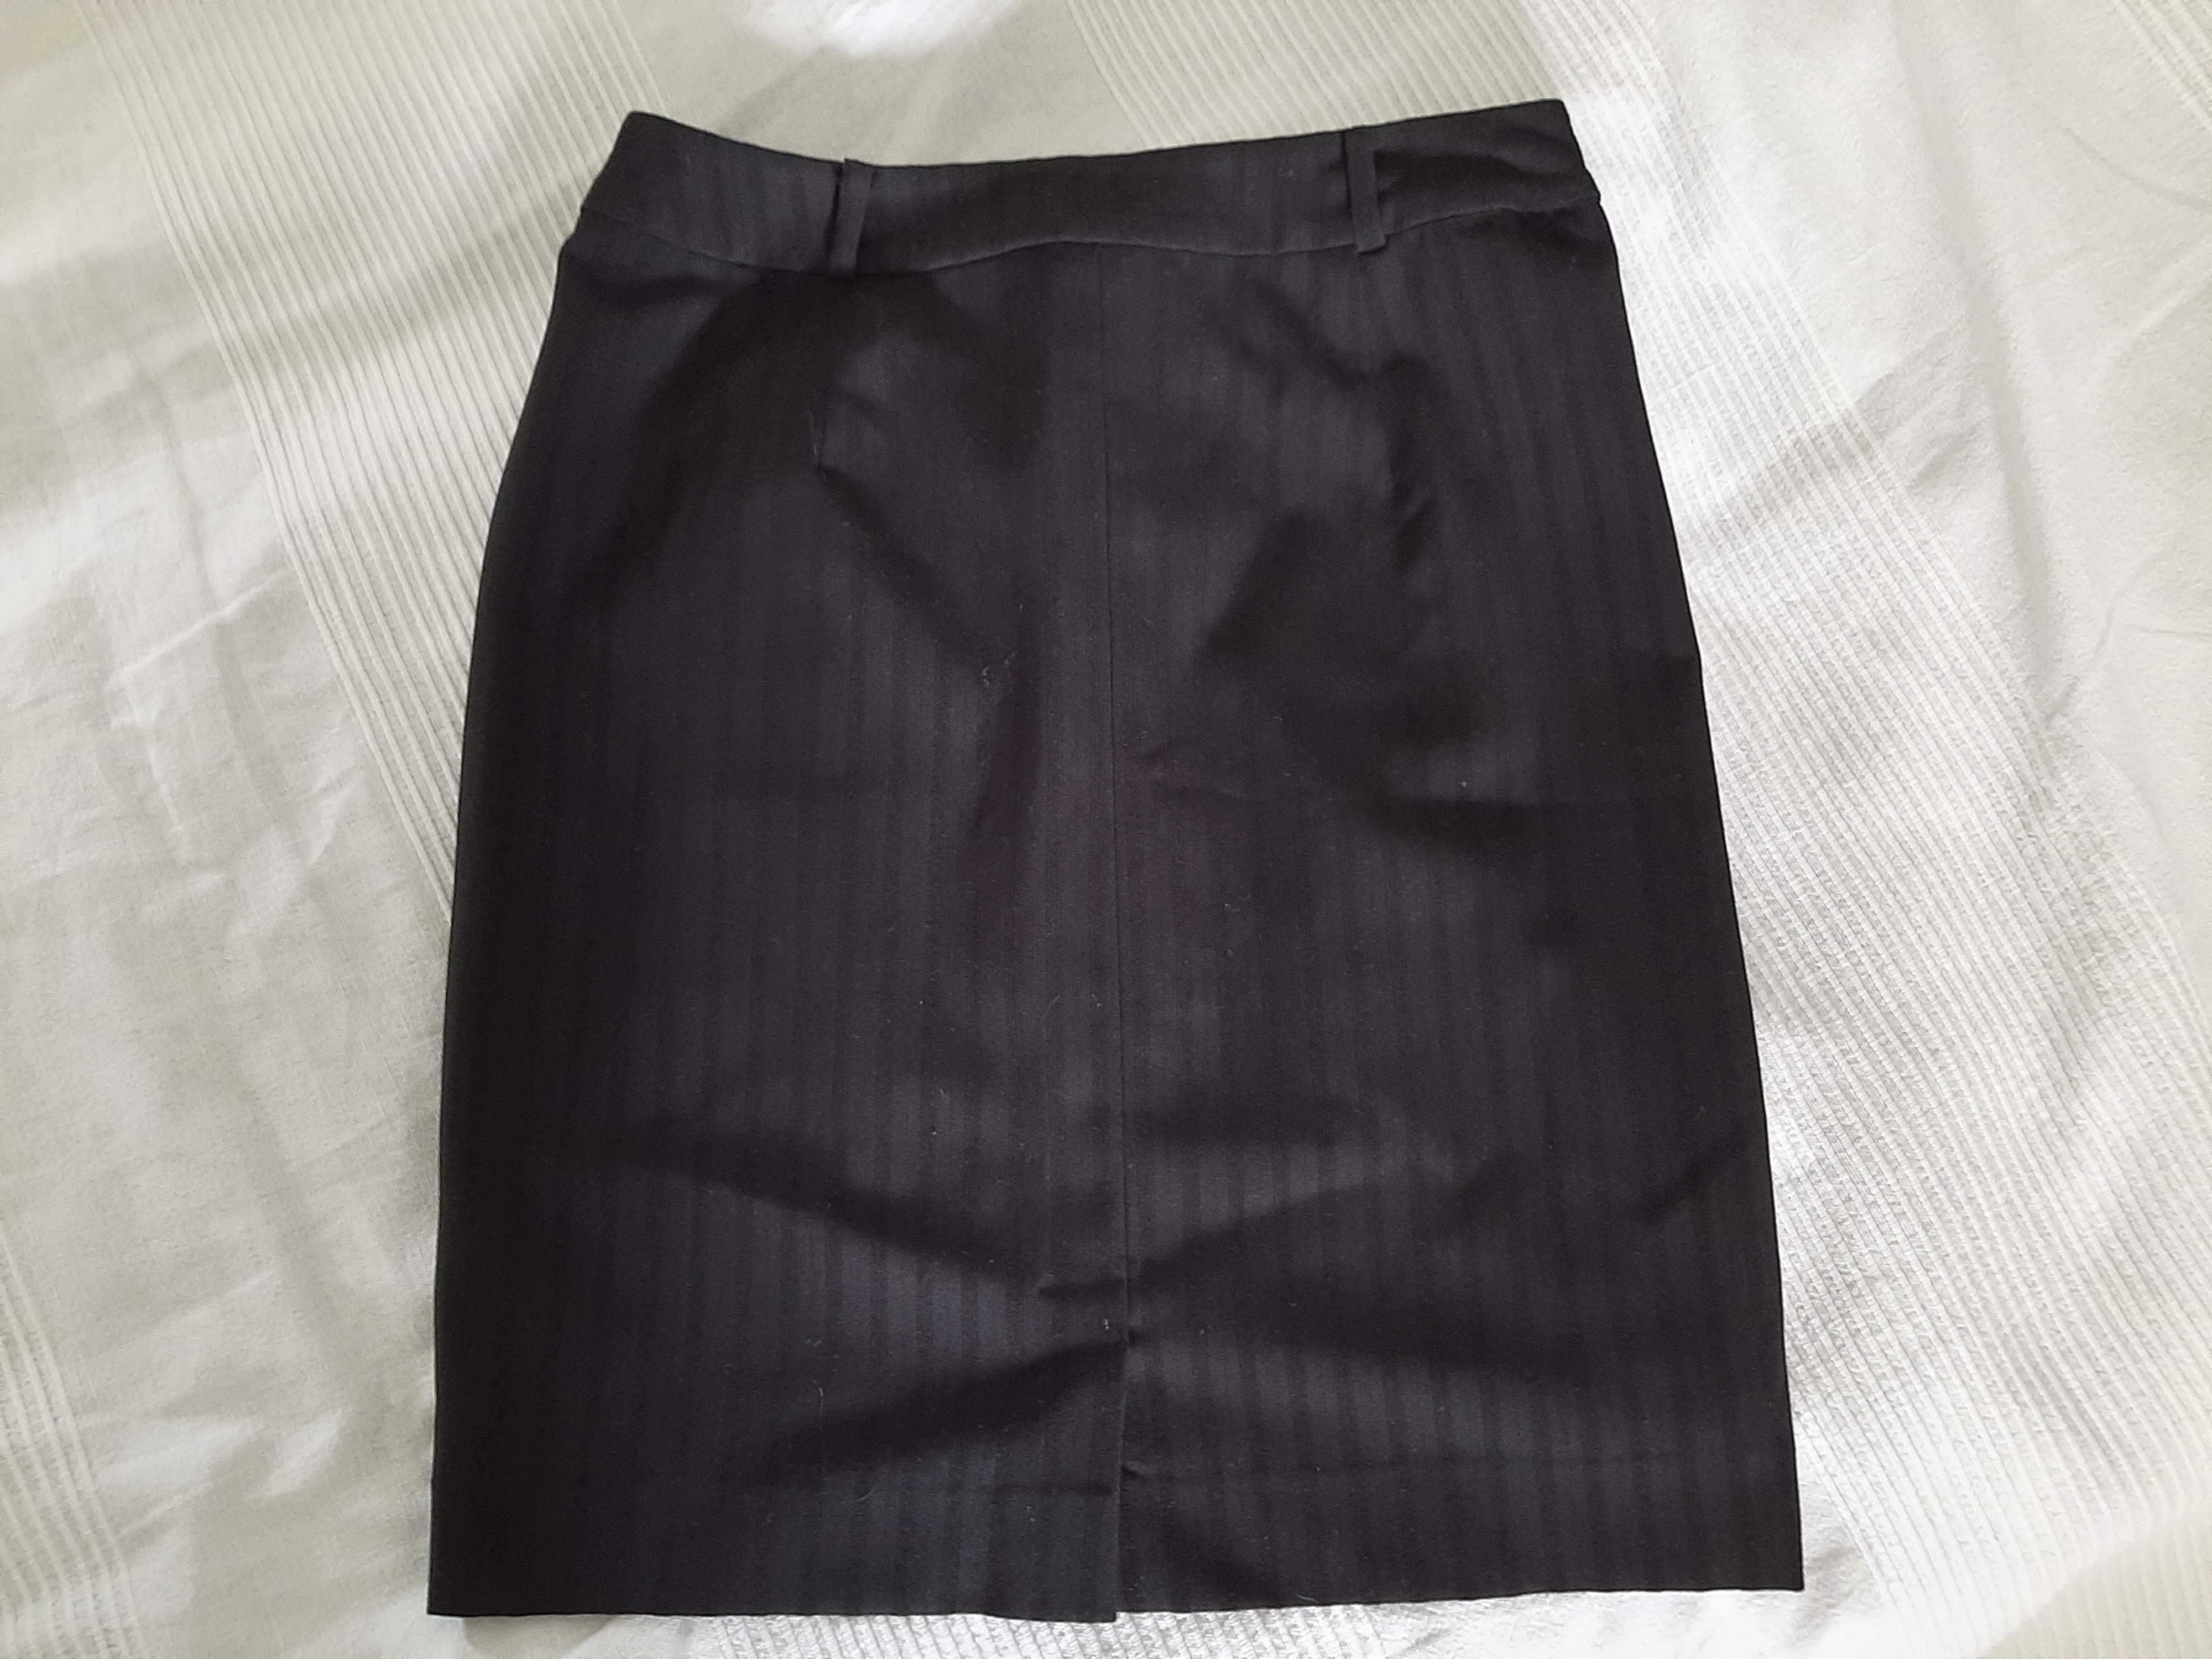 Czarna spódnica Esprit rozmiar S/36